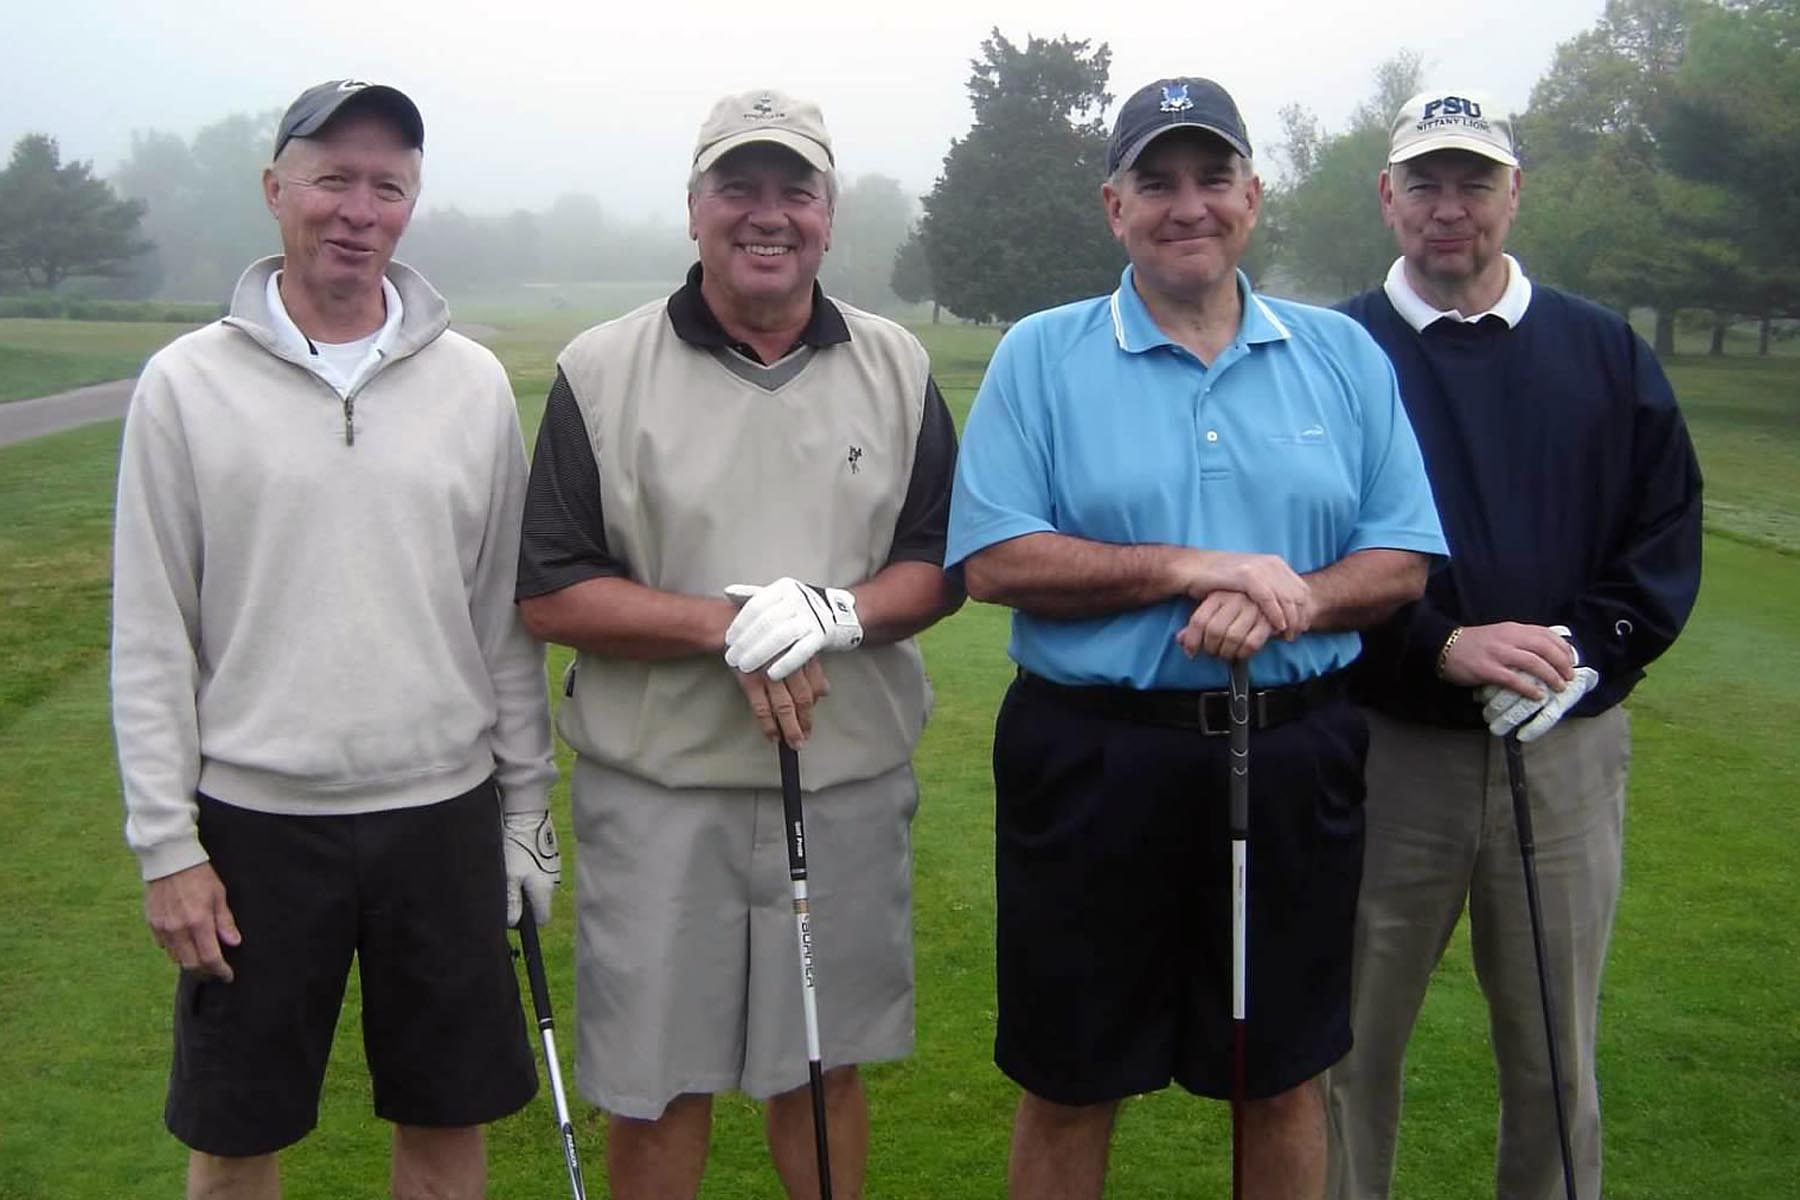  2012 Theta Chi Golf Open
L to R: Larry Bell, Ken Slaby, Bob Losinger, Greg Schlegel 